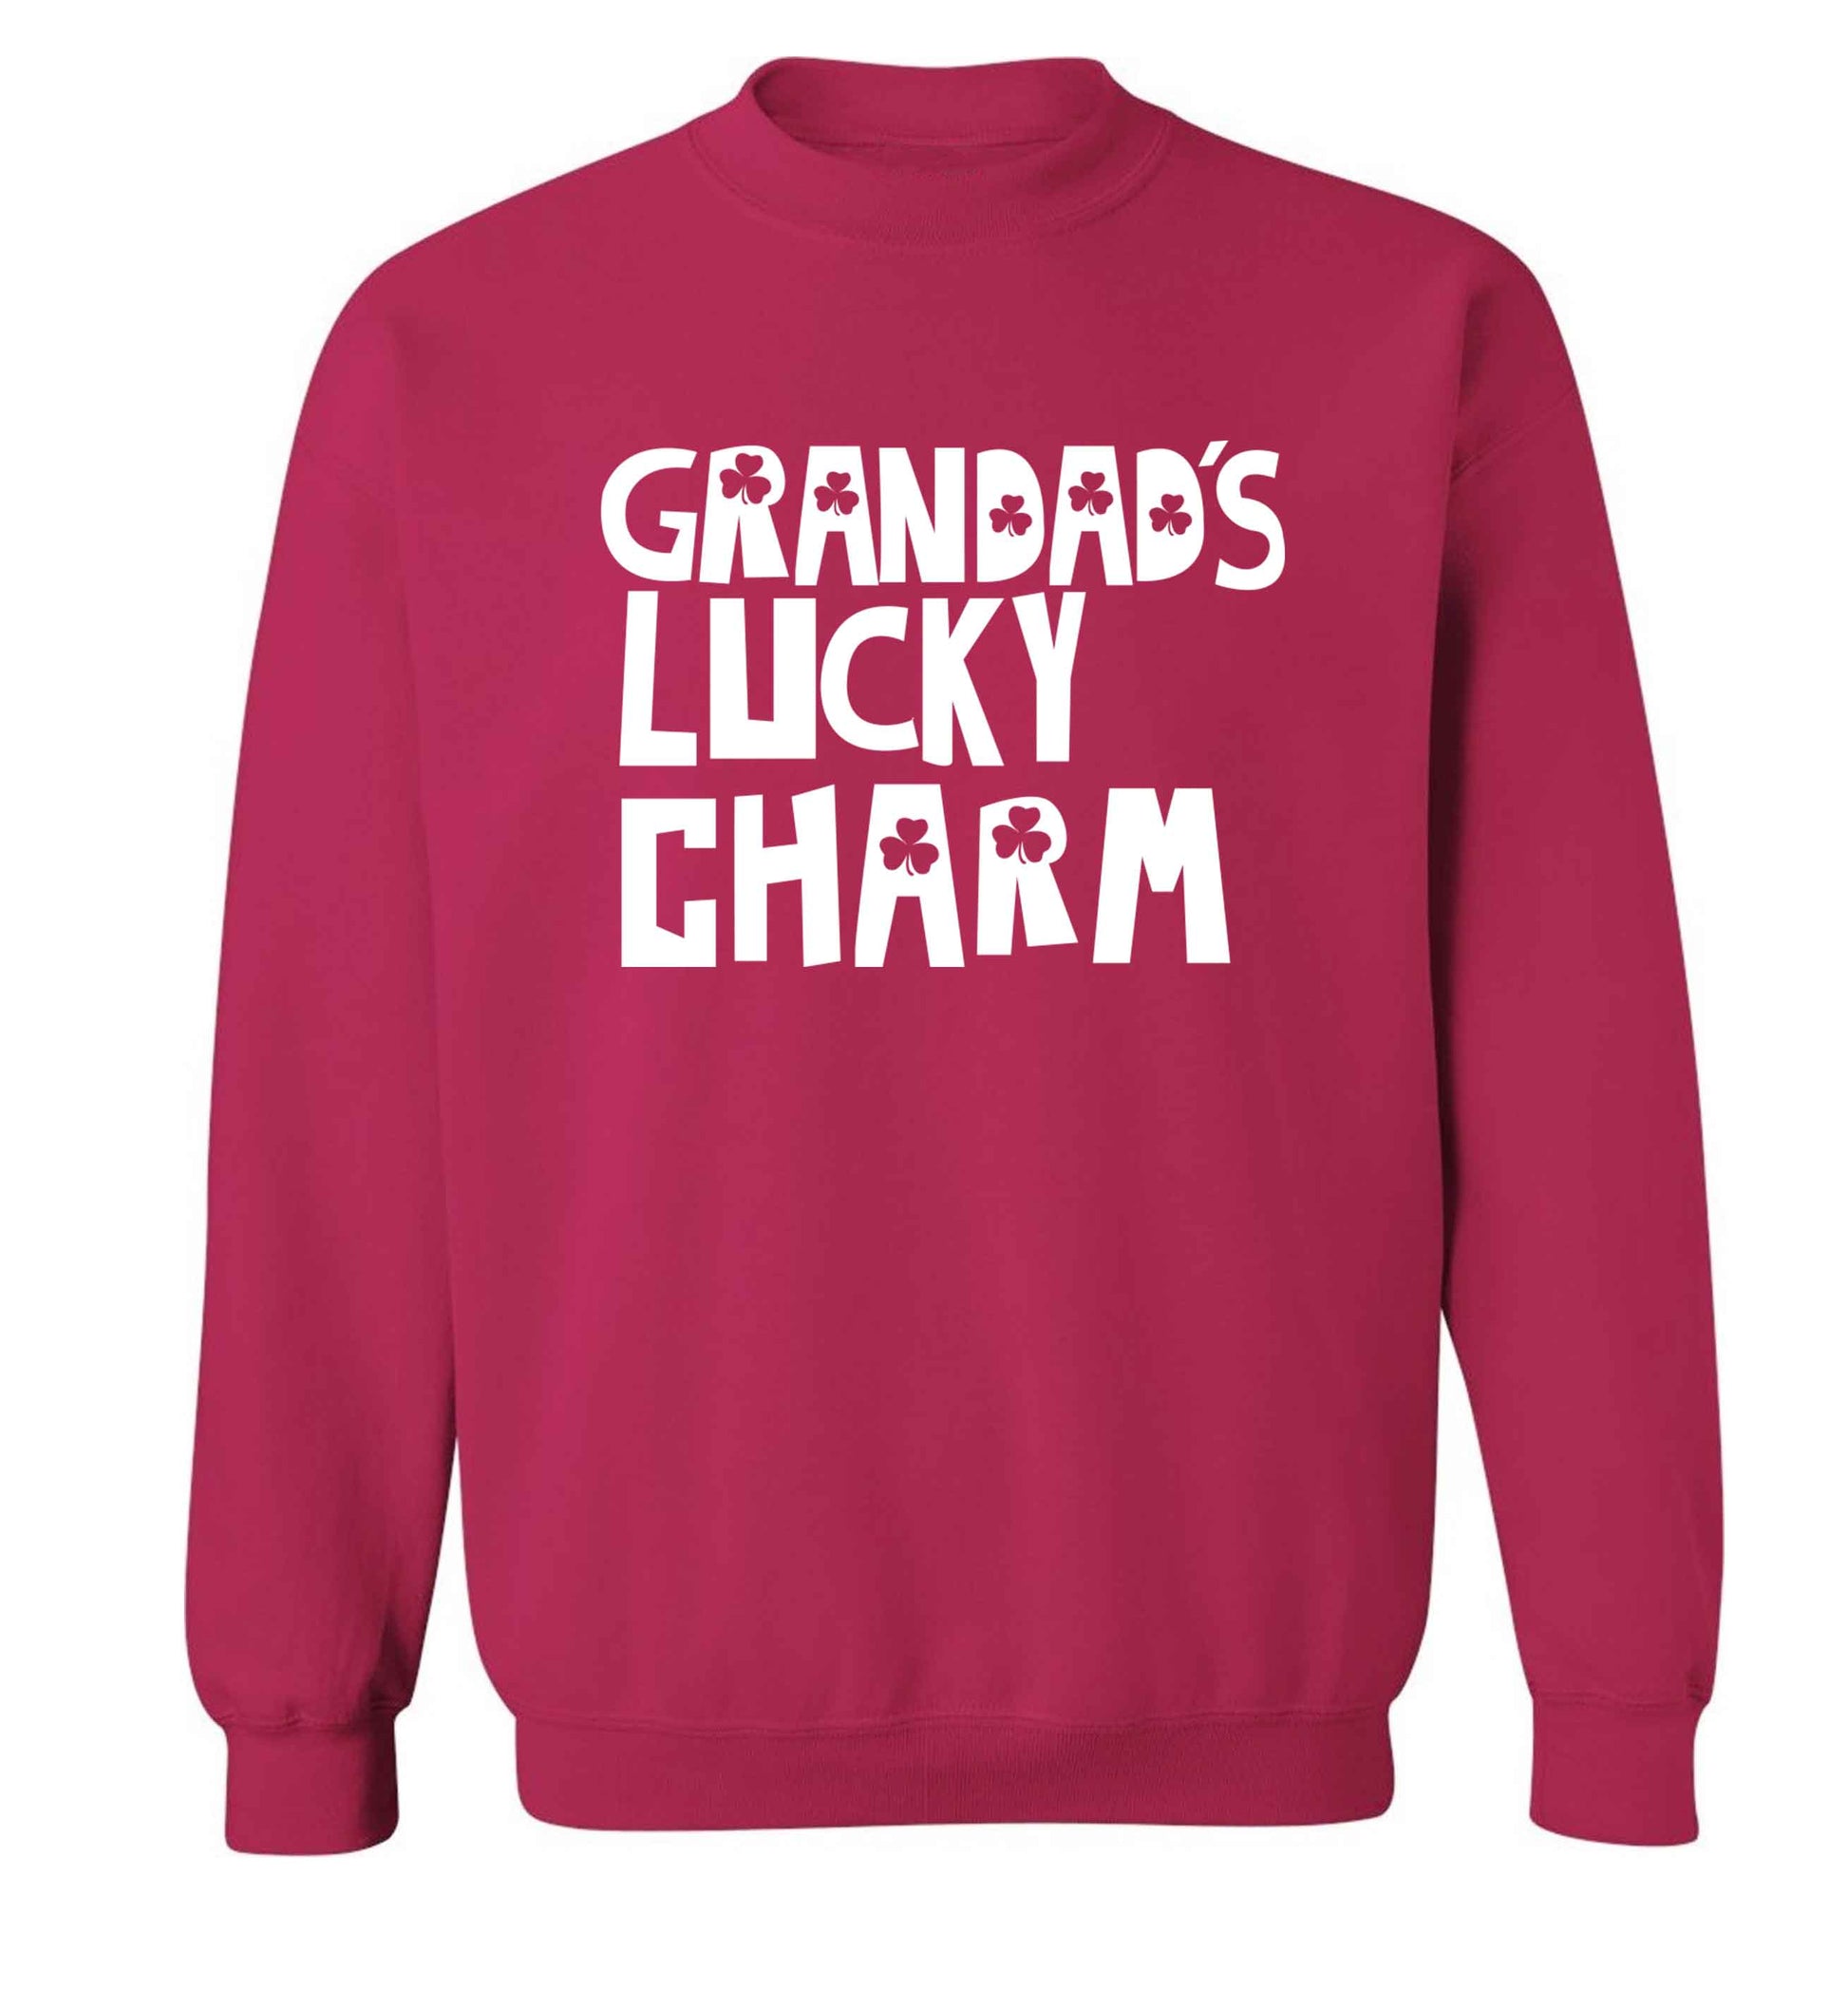 Grandad's lucky charm  adult's unisex pink sweater 2XL